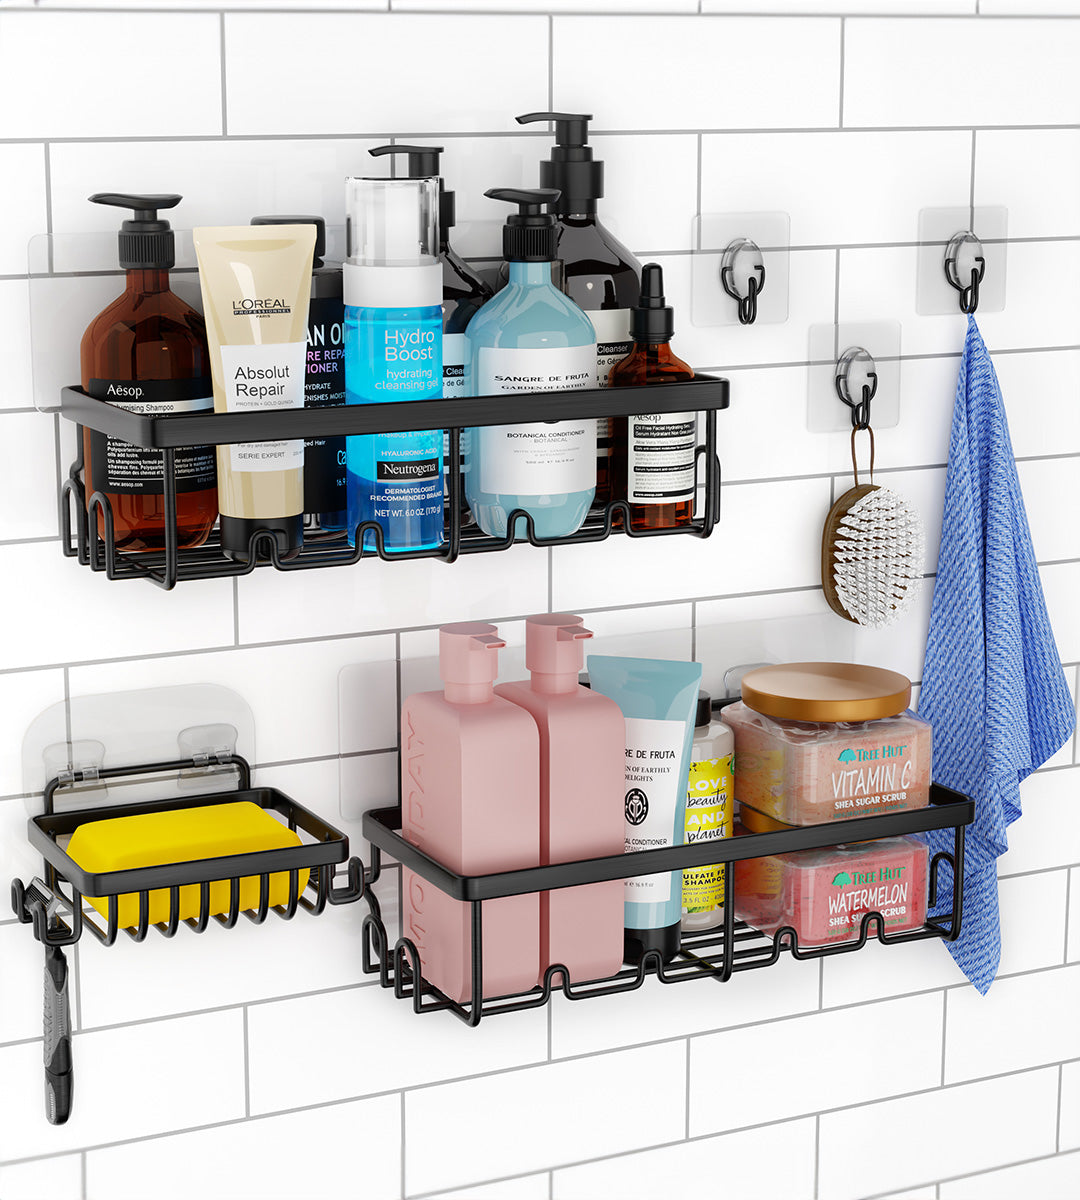 2 Pack Corner Shower Caddy,strong Adhesive Shower Organizer Shelf